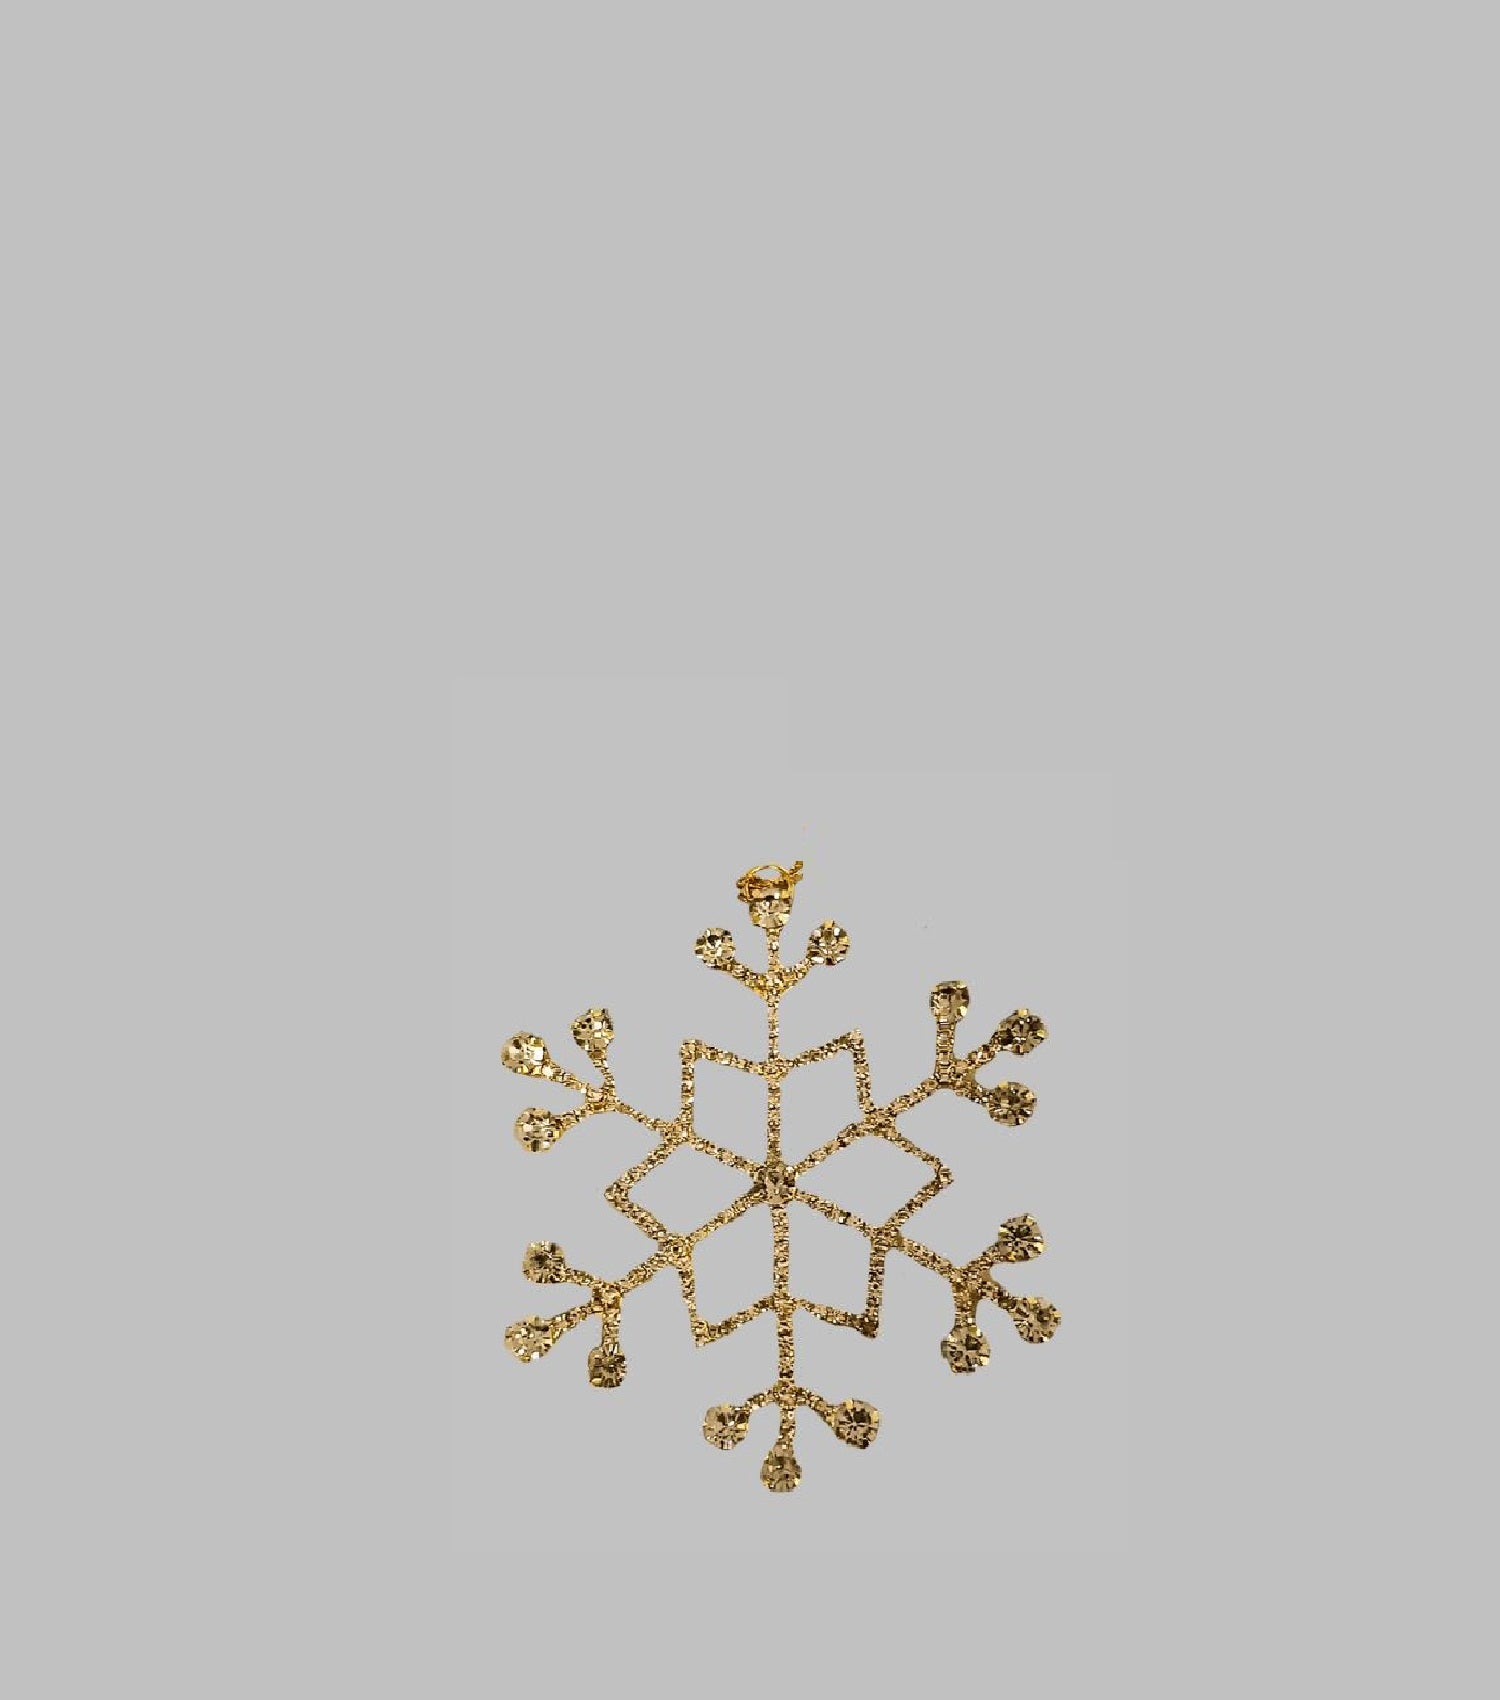 X Mas Beaded Snowflake ornament